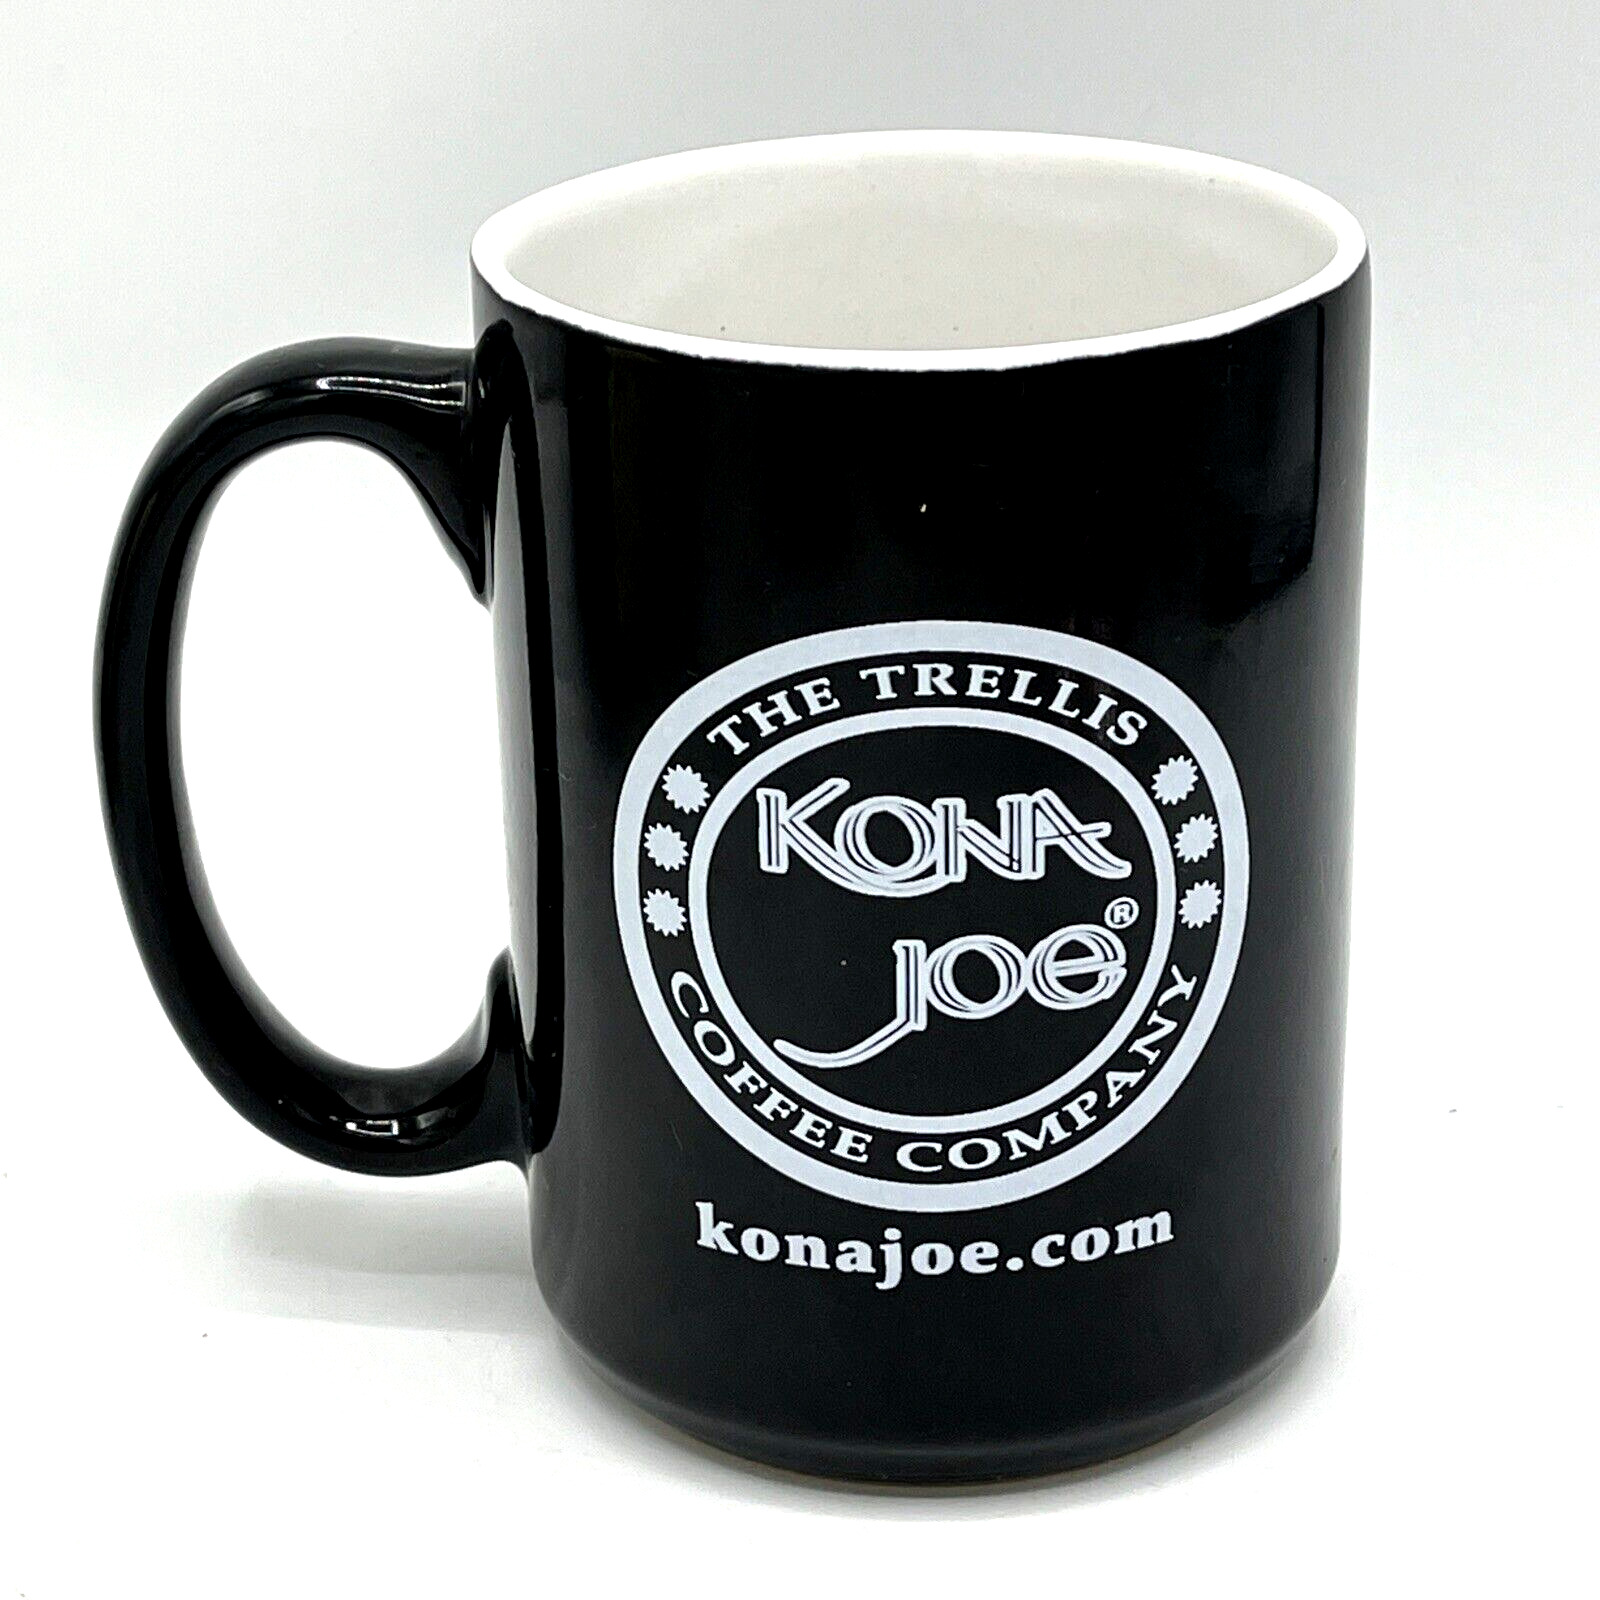 Kona Joe The Trellis Coffee Company Coffee Mug Black White